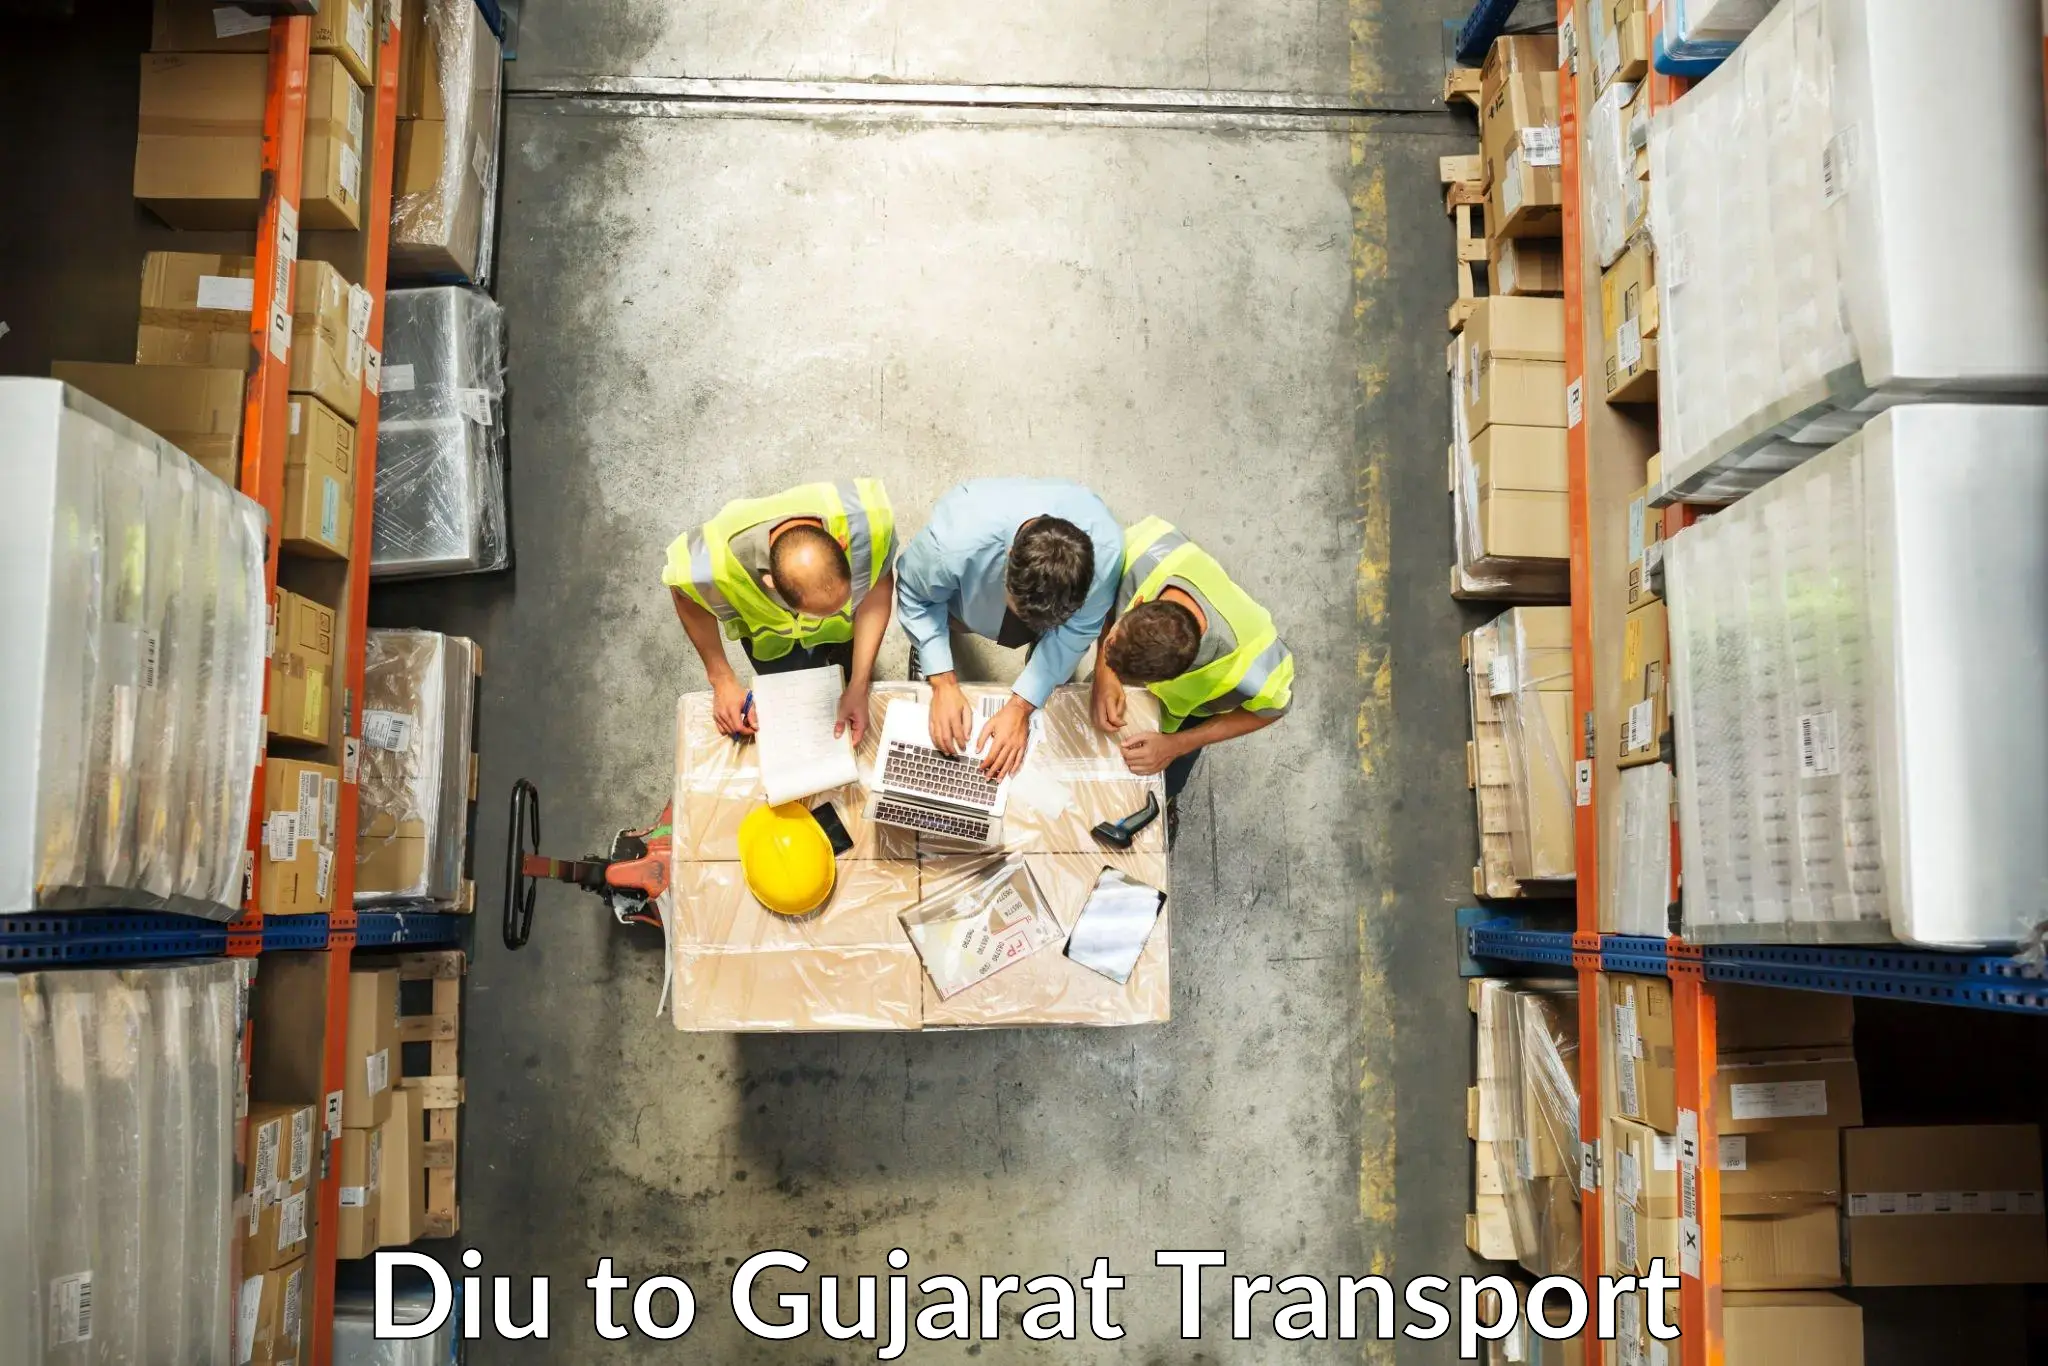 Truck transport companies in India Diu to Gujarat